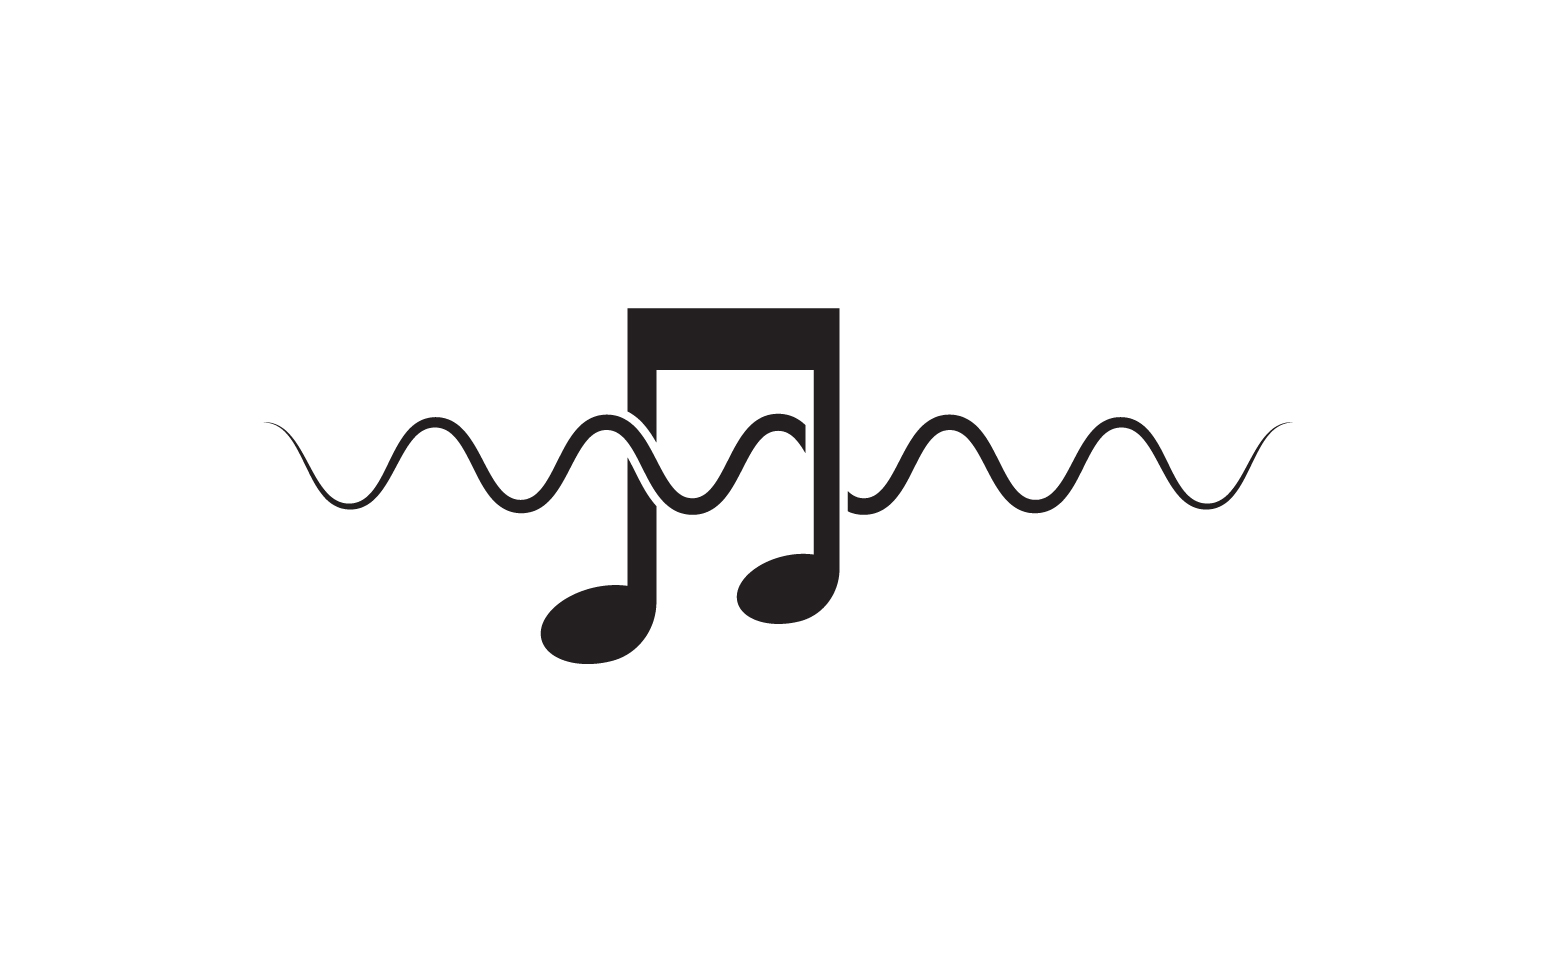 Music sound player app icon logo v.1